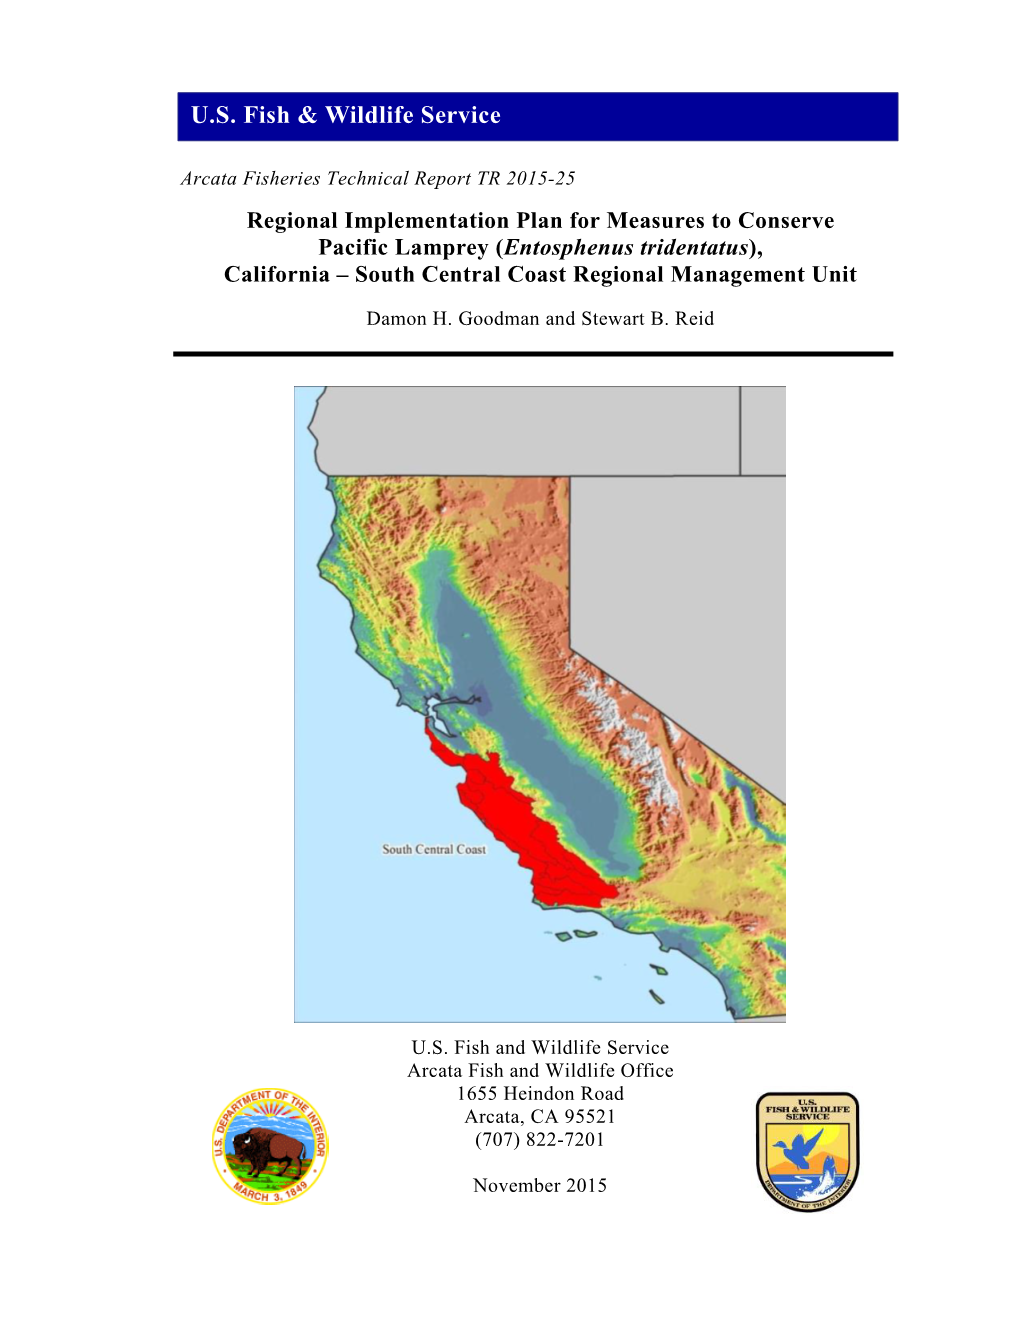 Regional Implementation Plan for Measures to Conserve Pacific Lamprey (Entosphenus Tridentatus), California – South Central Coast Regional Management Unit